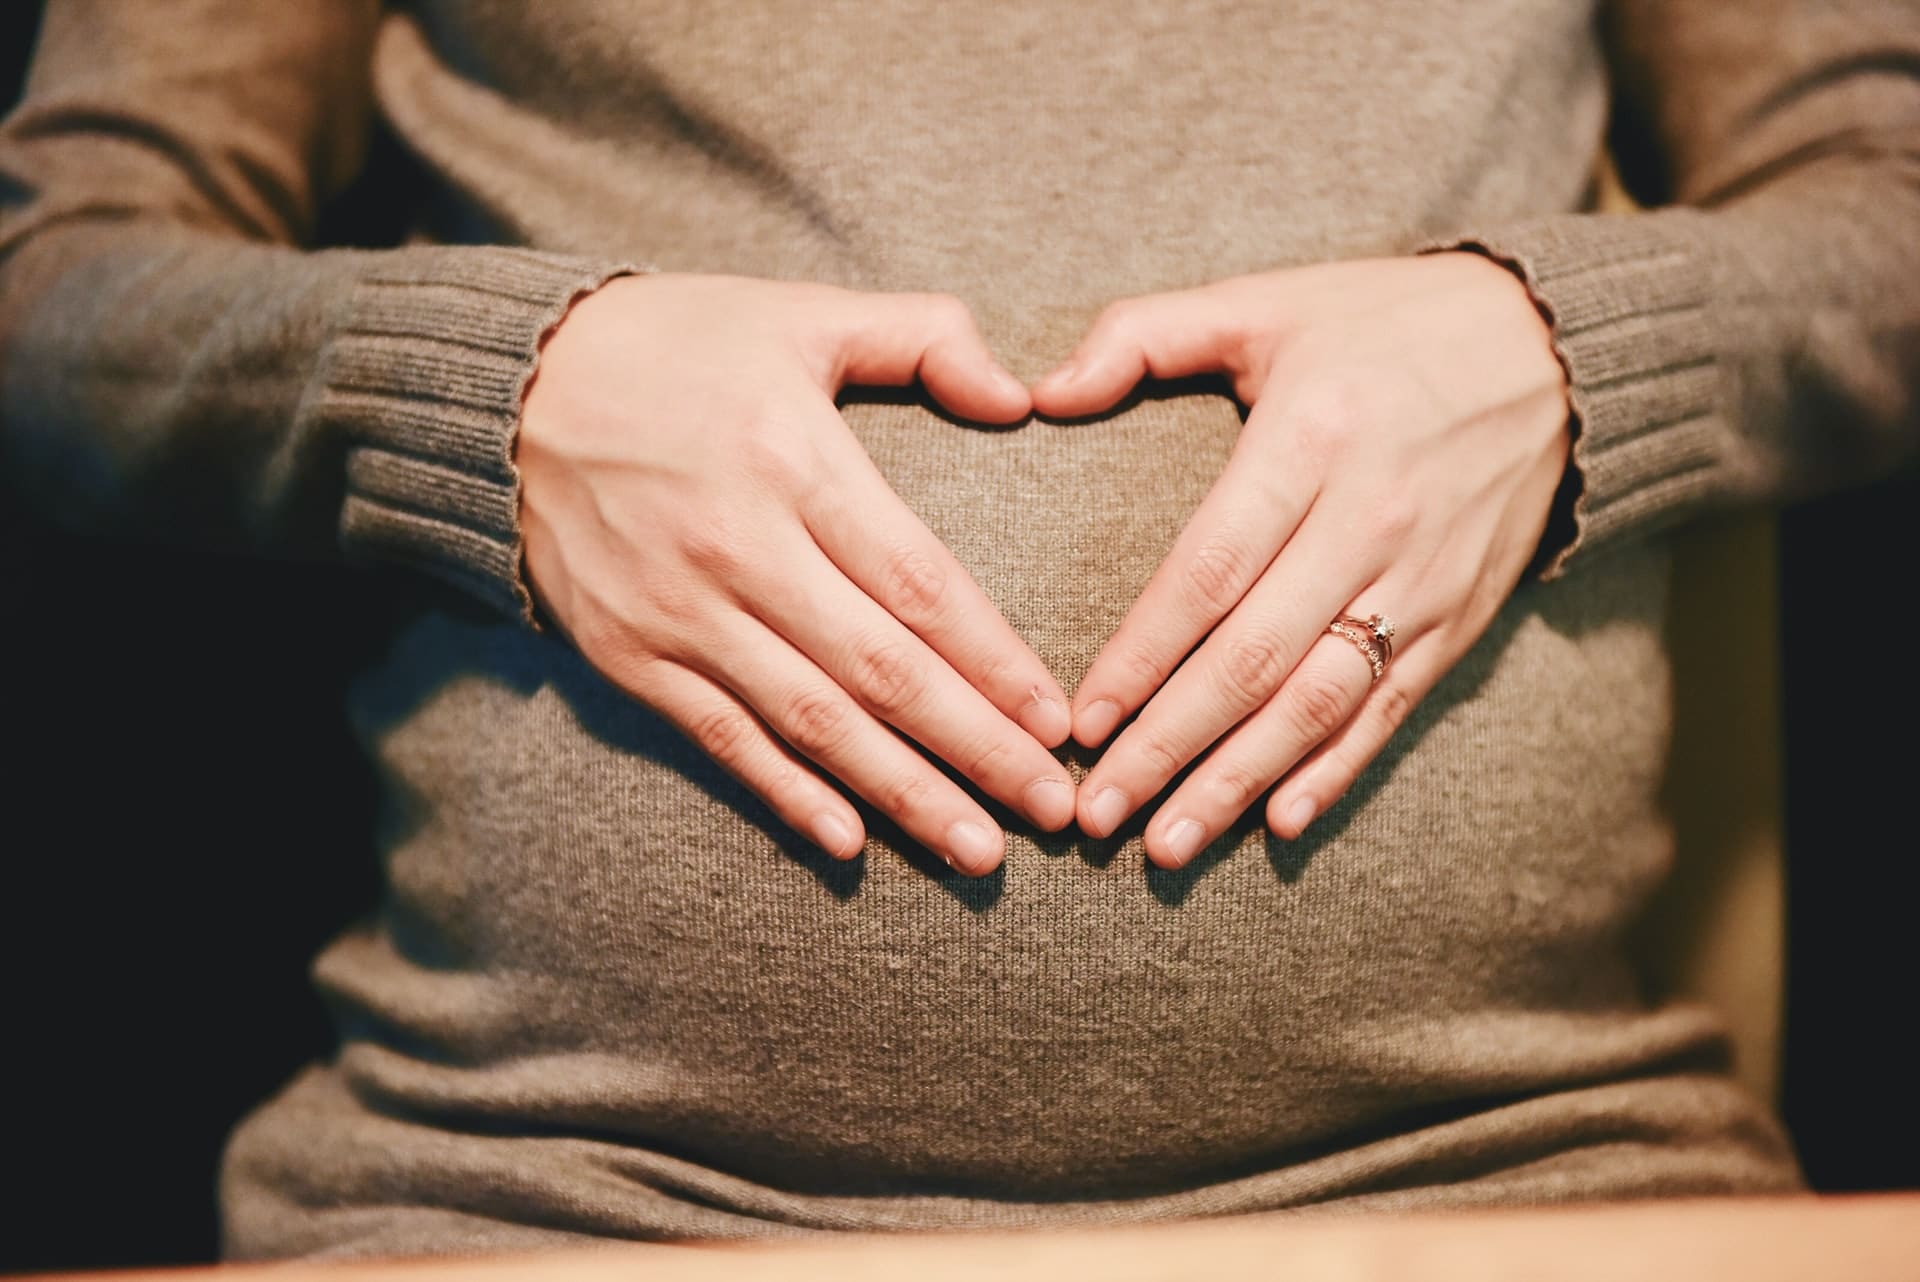 pregnancy detnal - 5 Steps for a Healthy Pregnancy